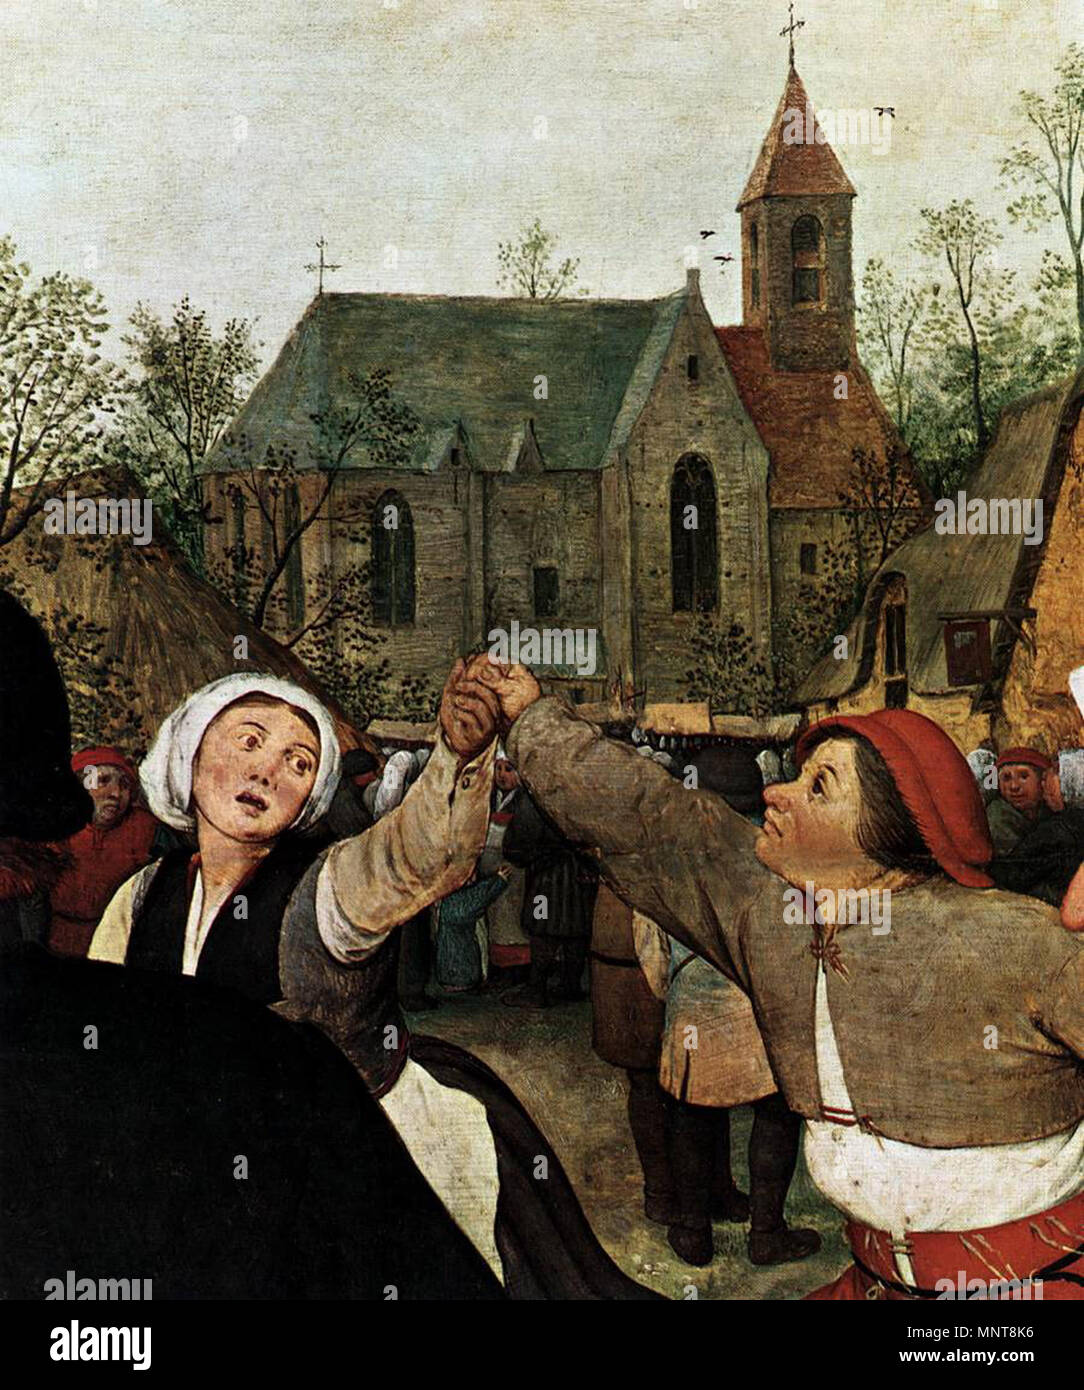 The Peasant Dance (detail)   circa 1567.   990 Pieter Bruegel the Elder - The Peasant Dance (detail) - WGA3500 Stock Photo